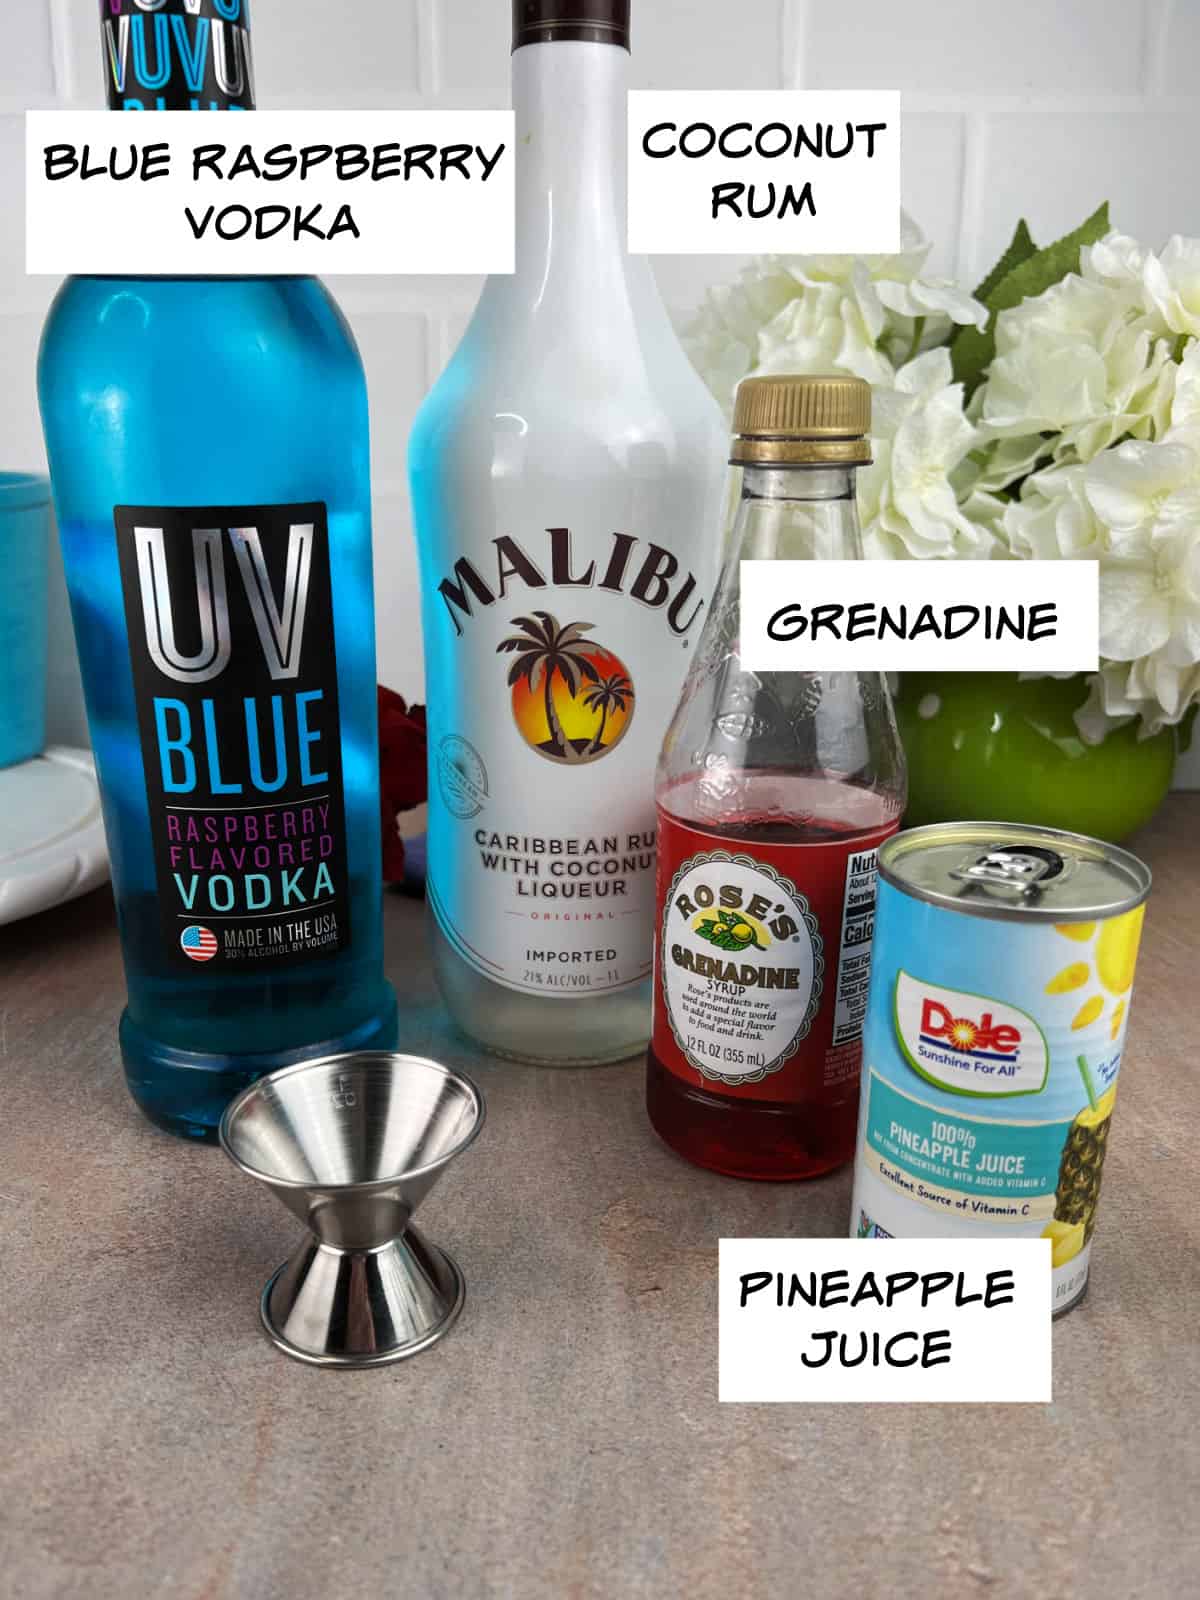 Ingredients: blue raspberry vodka, coconut rum, grenadine, pineapple juice.